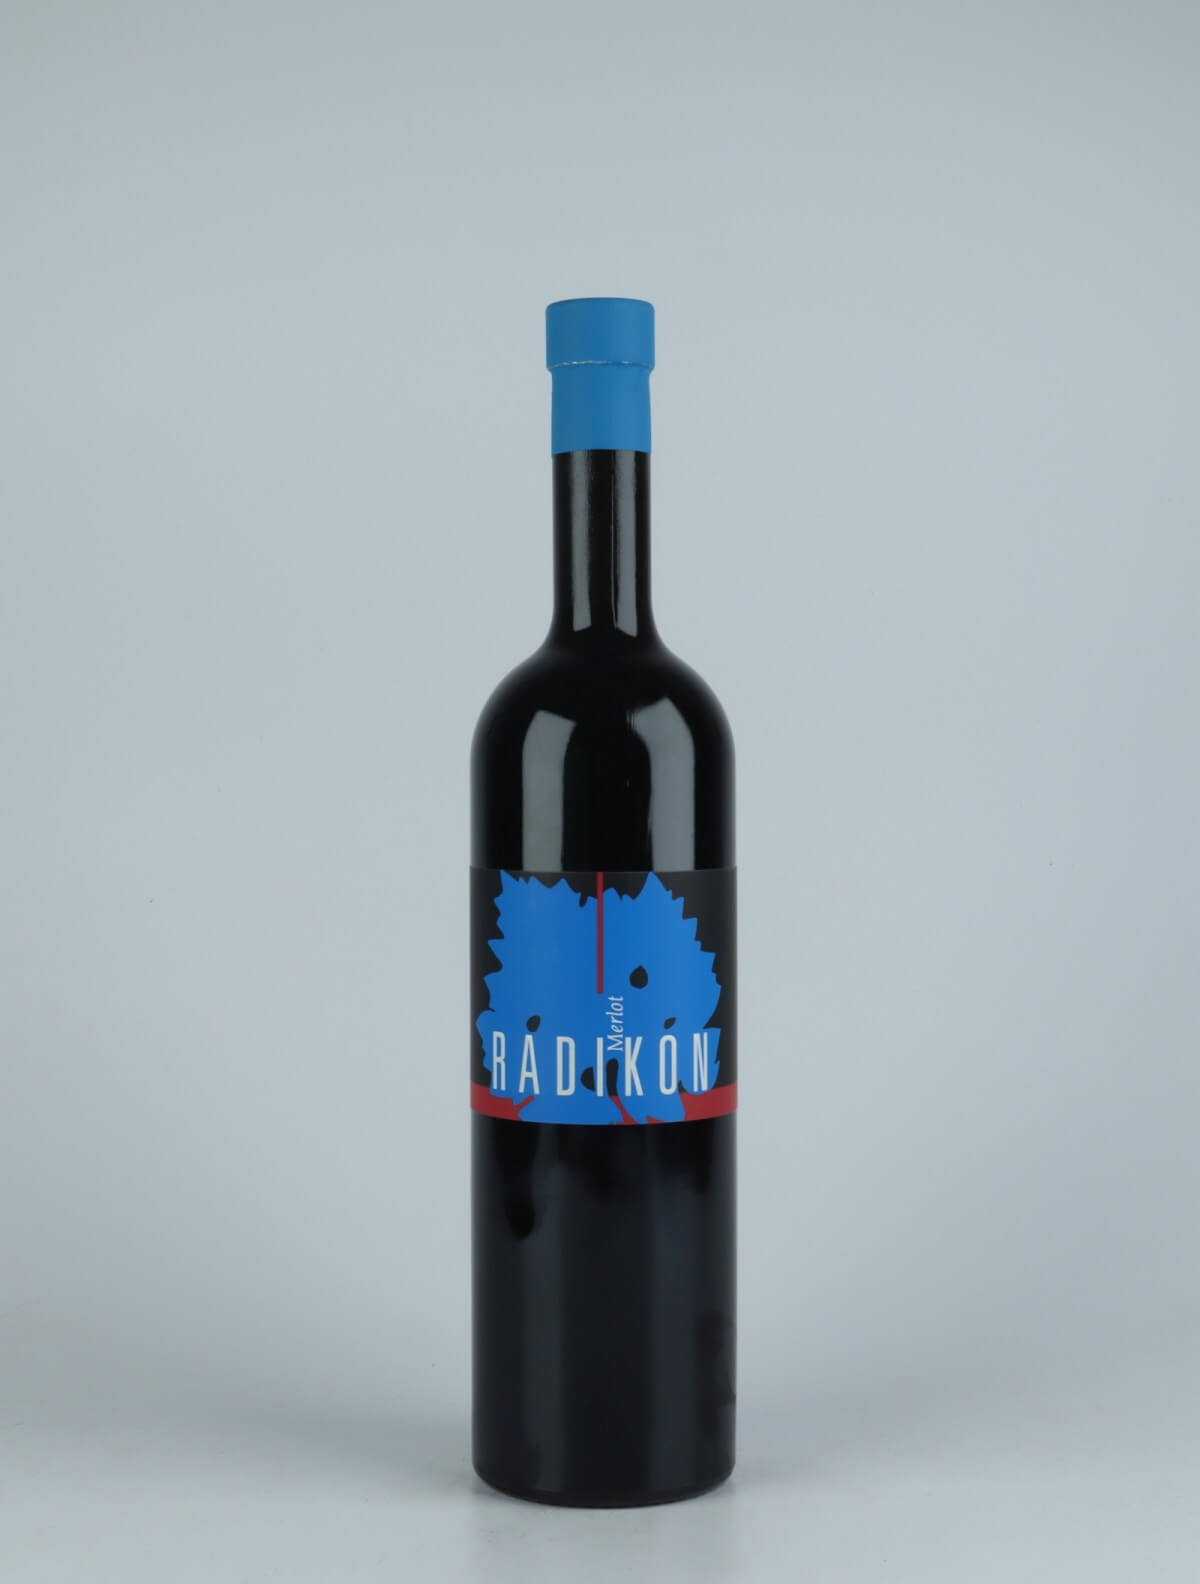 A bottle 2006 Merlot Red wine from Radikon, Friuli in Italy